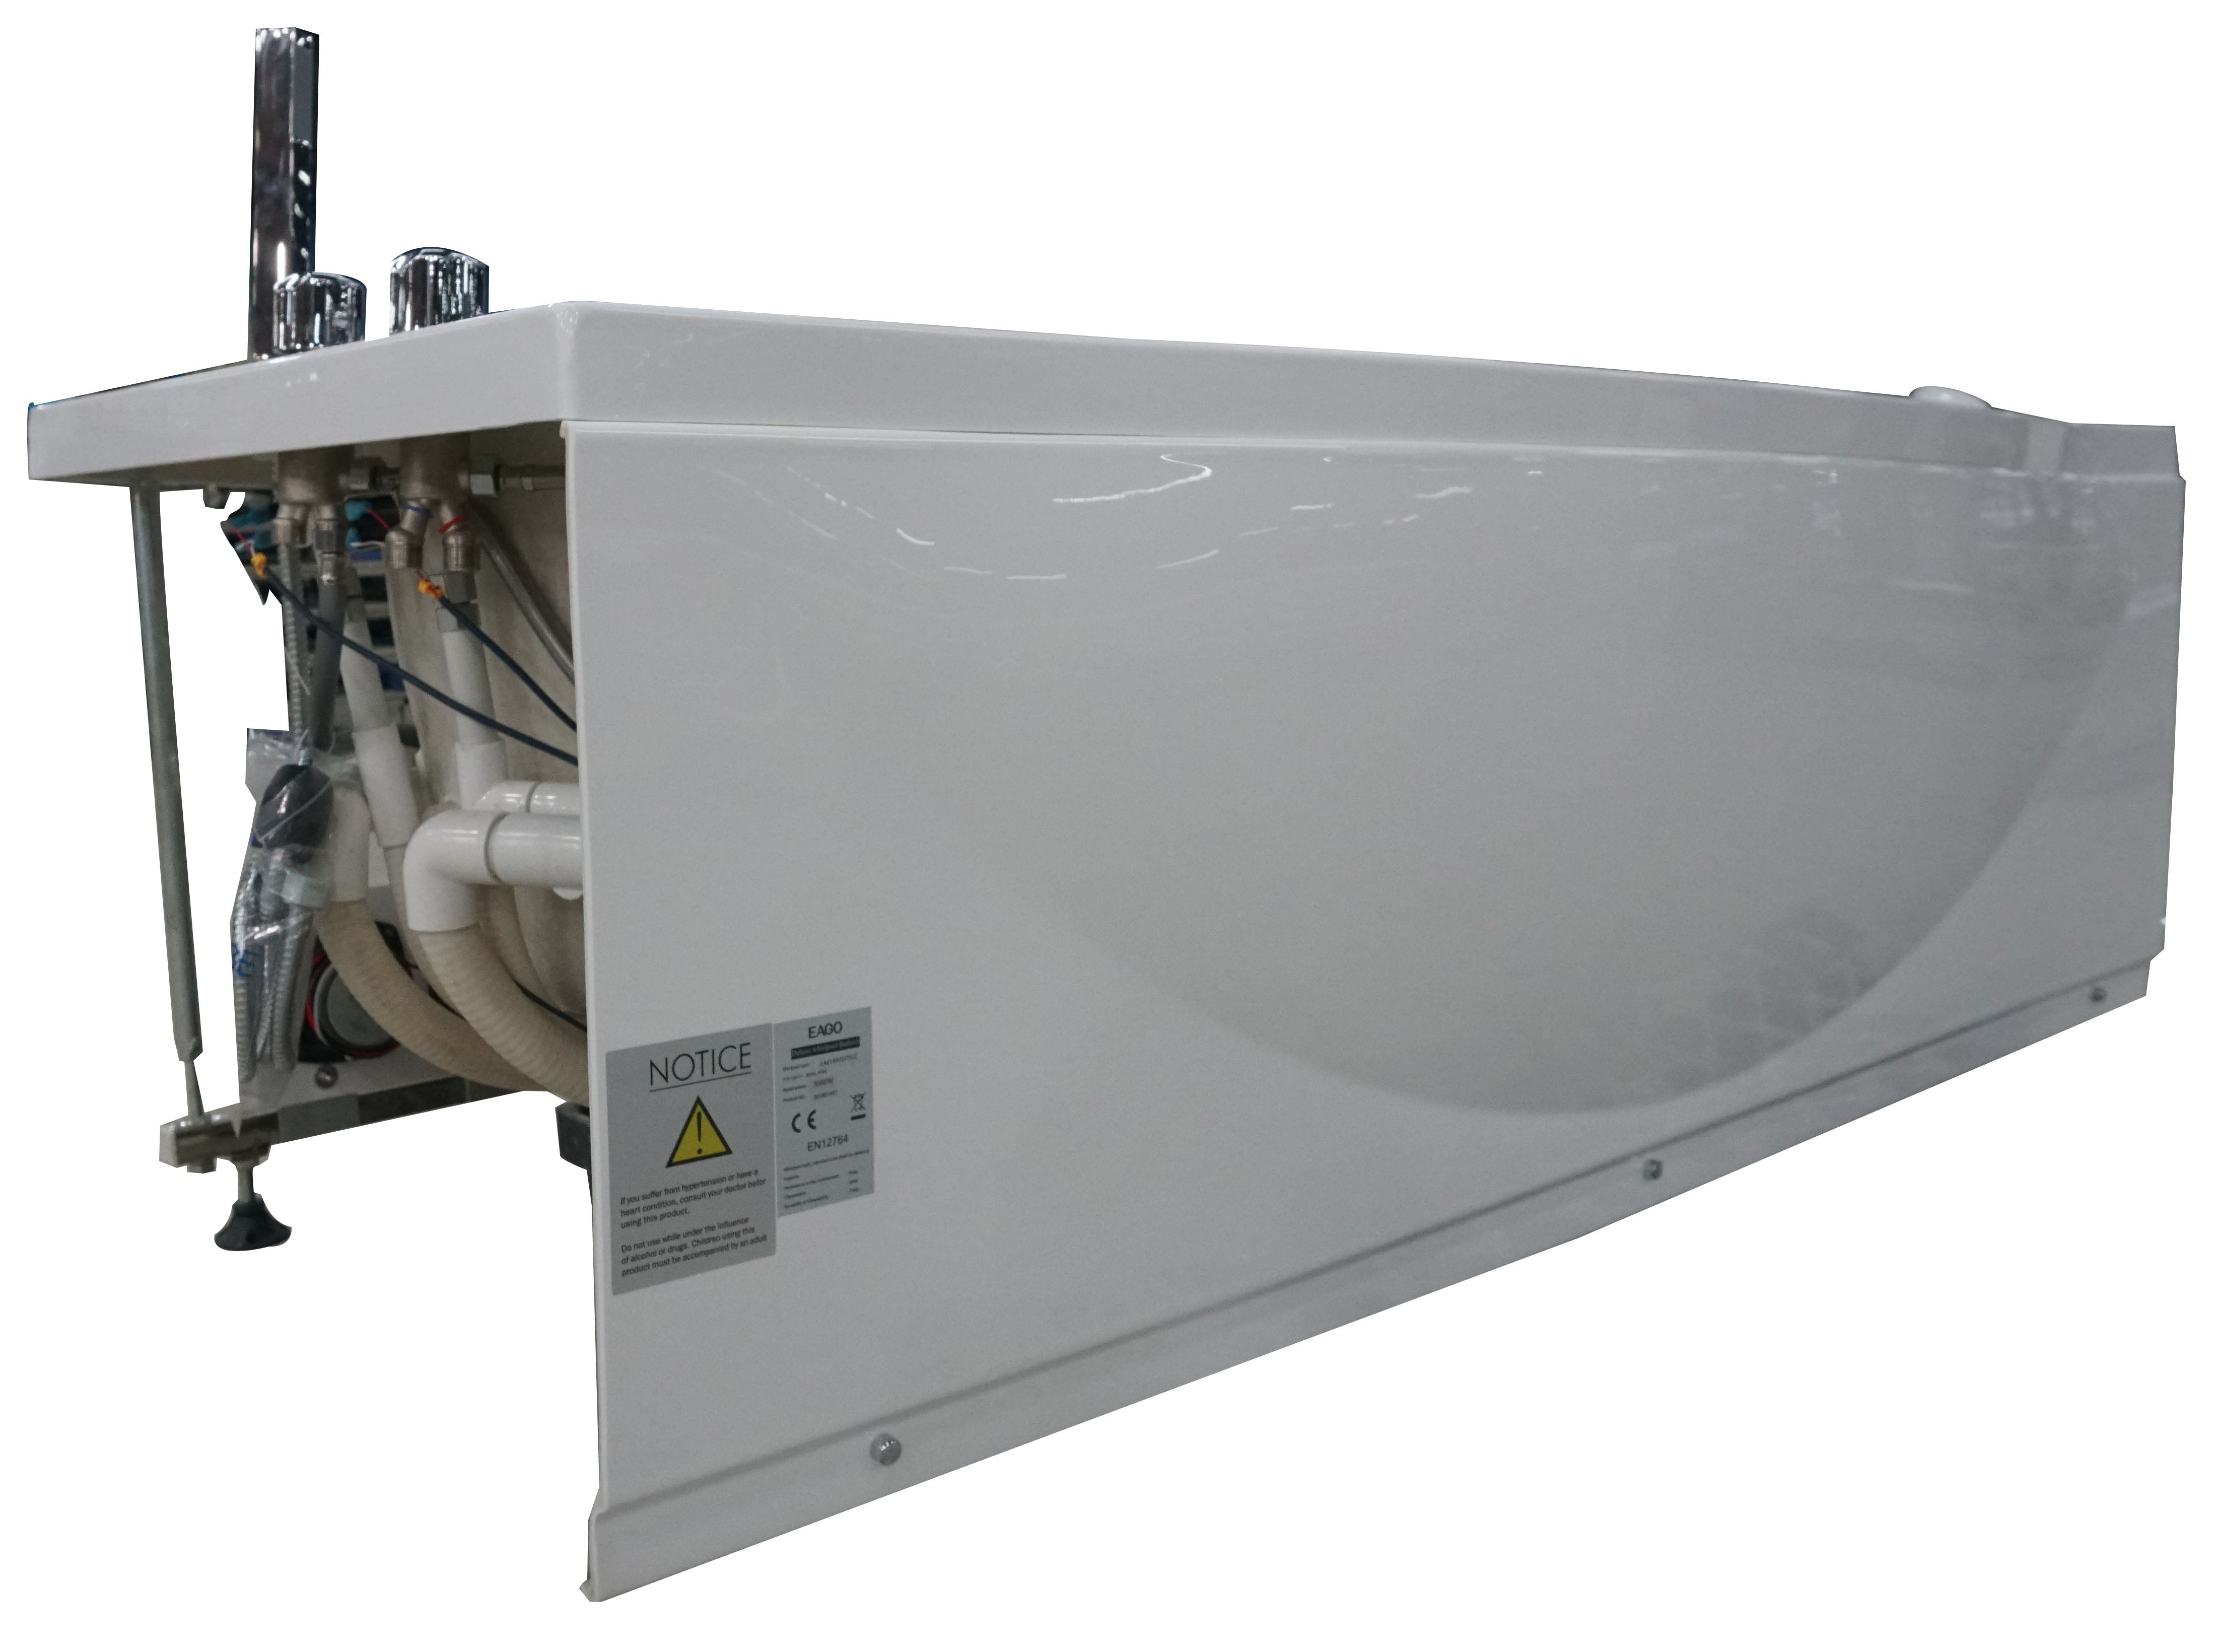 EAGO - 6 ft Left Drain Acrylic White Whirlpool Bathtub w Fixtures | AM189ETL-L